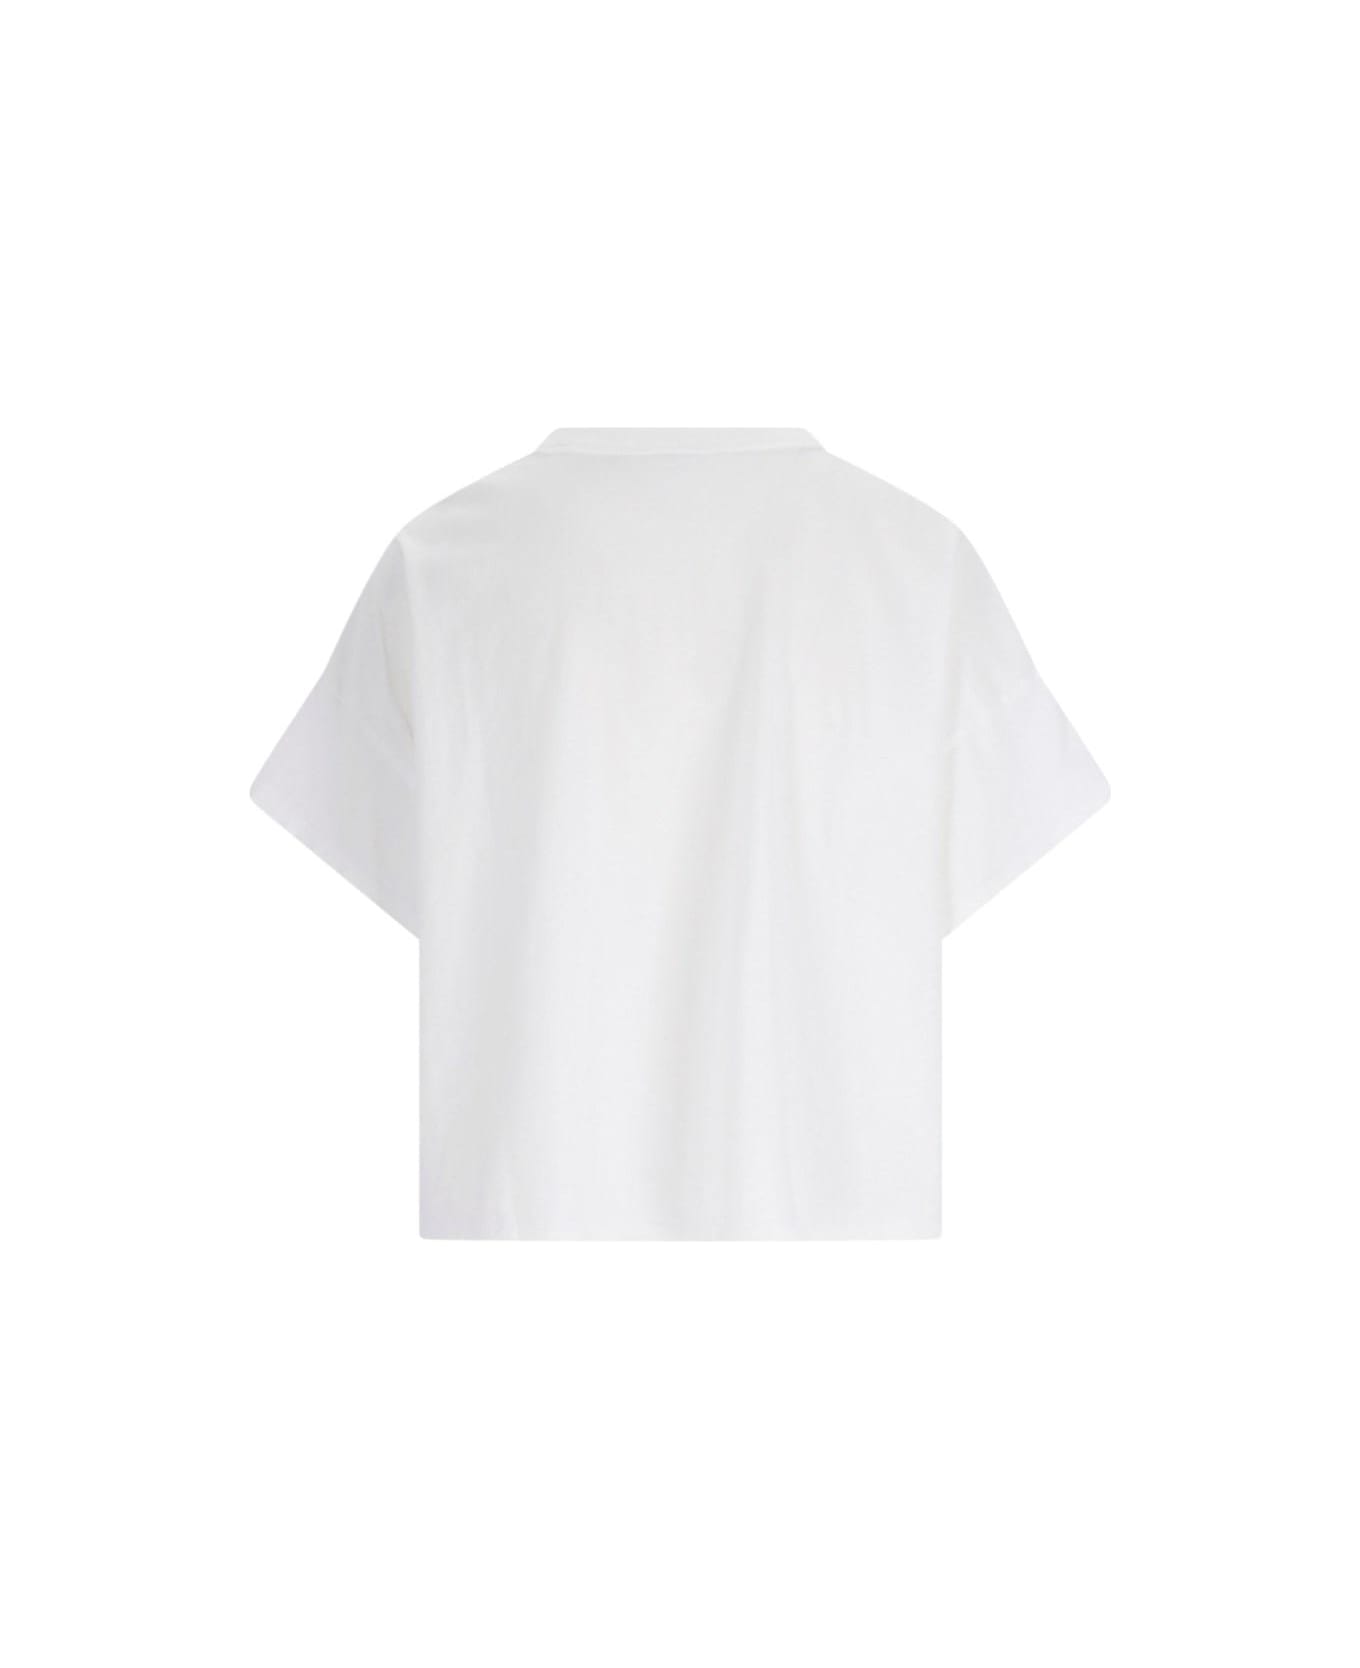 Undercover Jun Takahashi 'ambiguous World' T-shirt - White